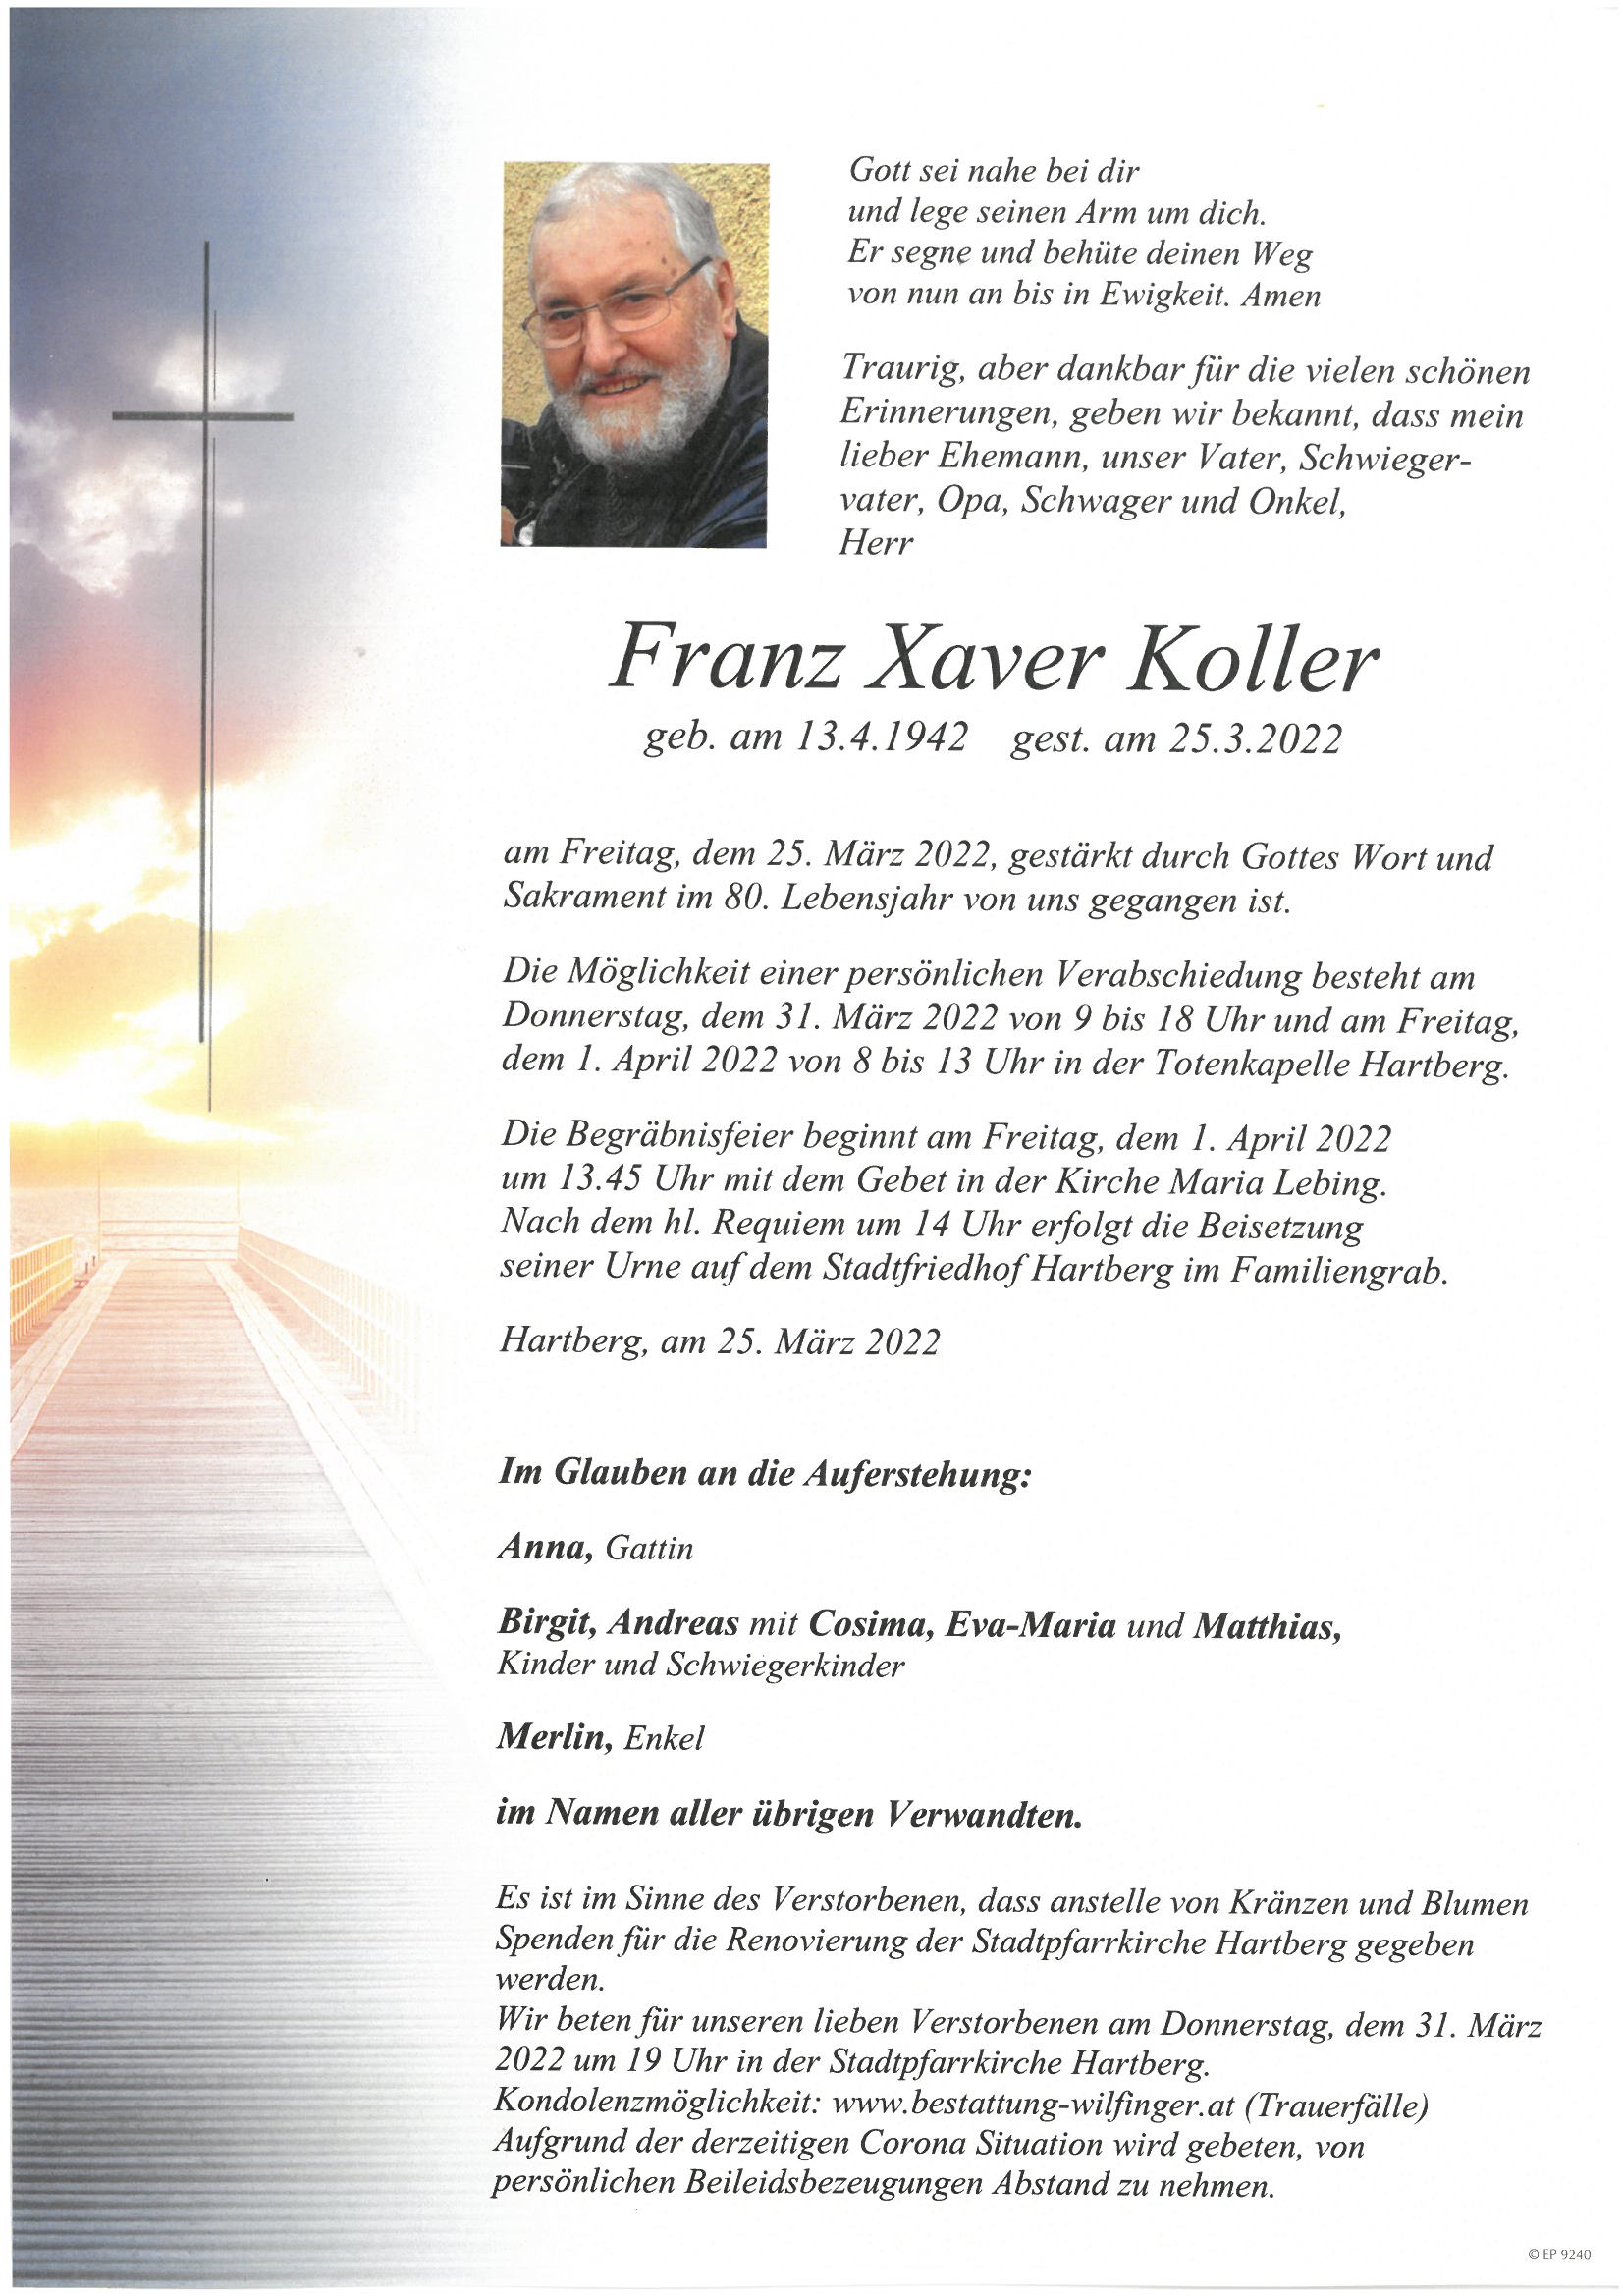 Franz Xaver Koller, Hartberg